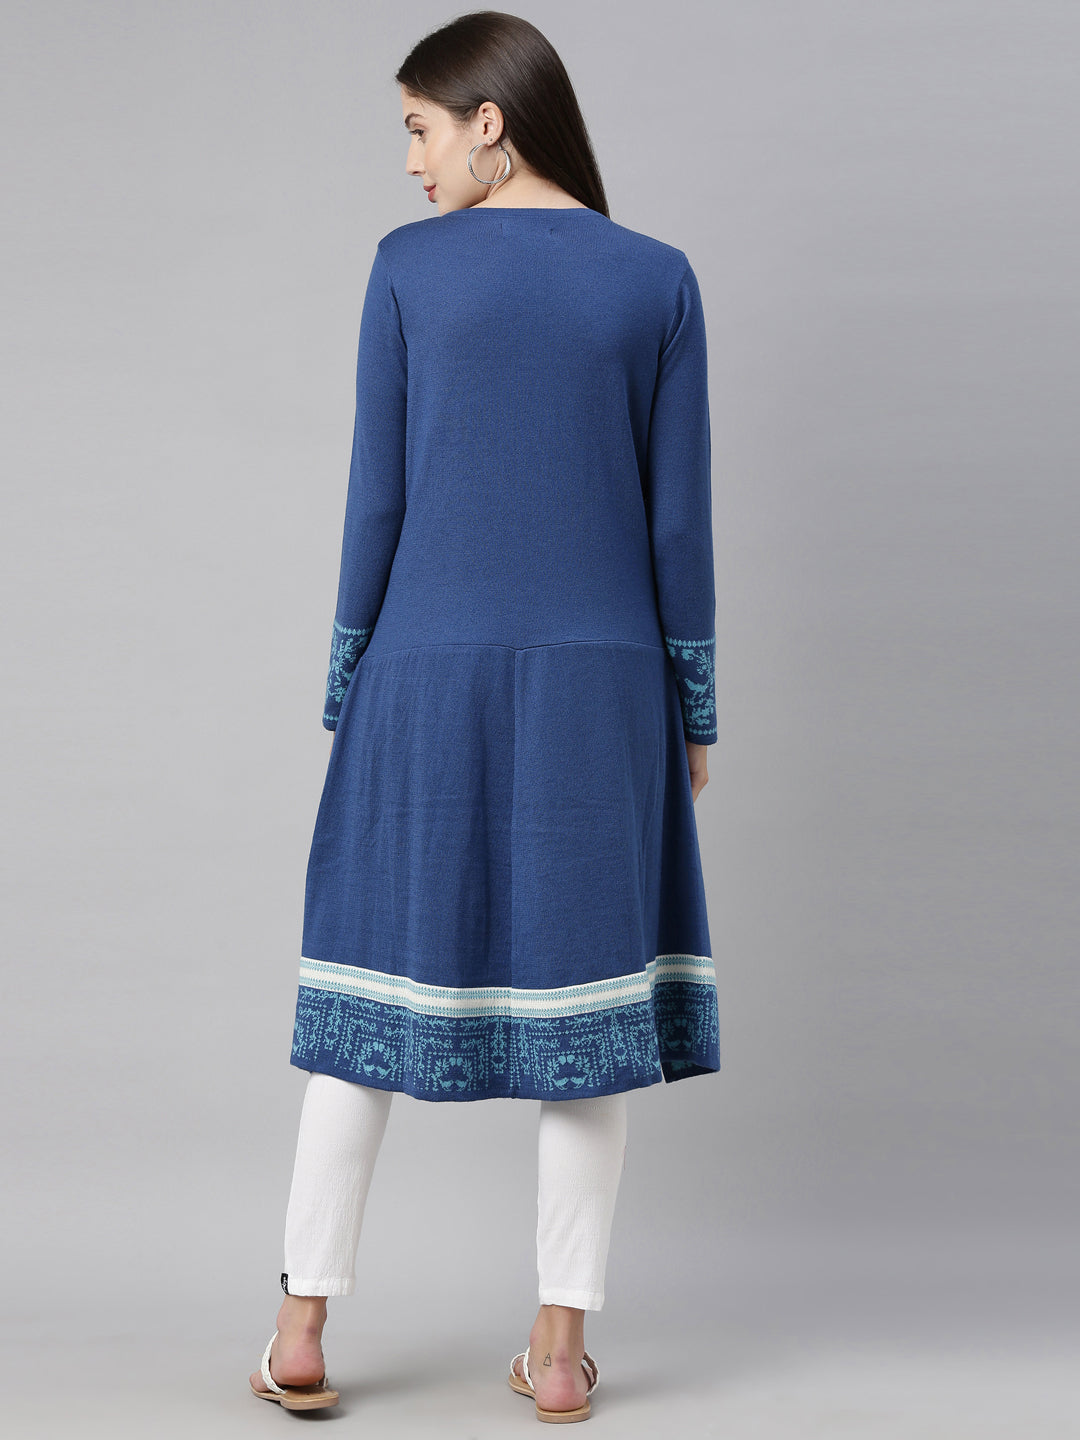 Neeru's Peacock Color Undefined Fabric Kurtha Winter Wear